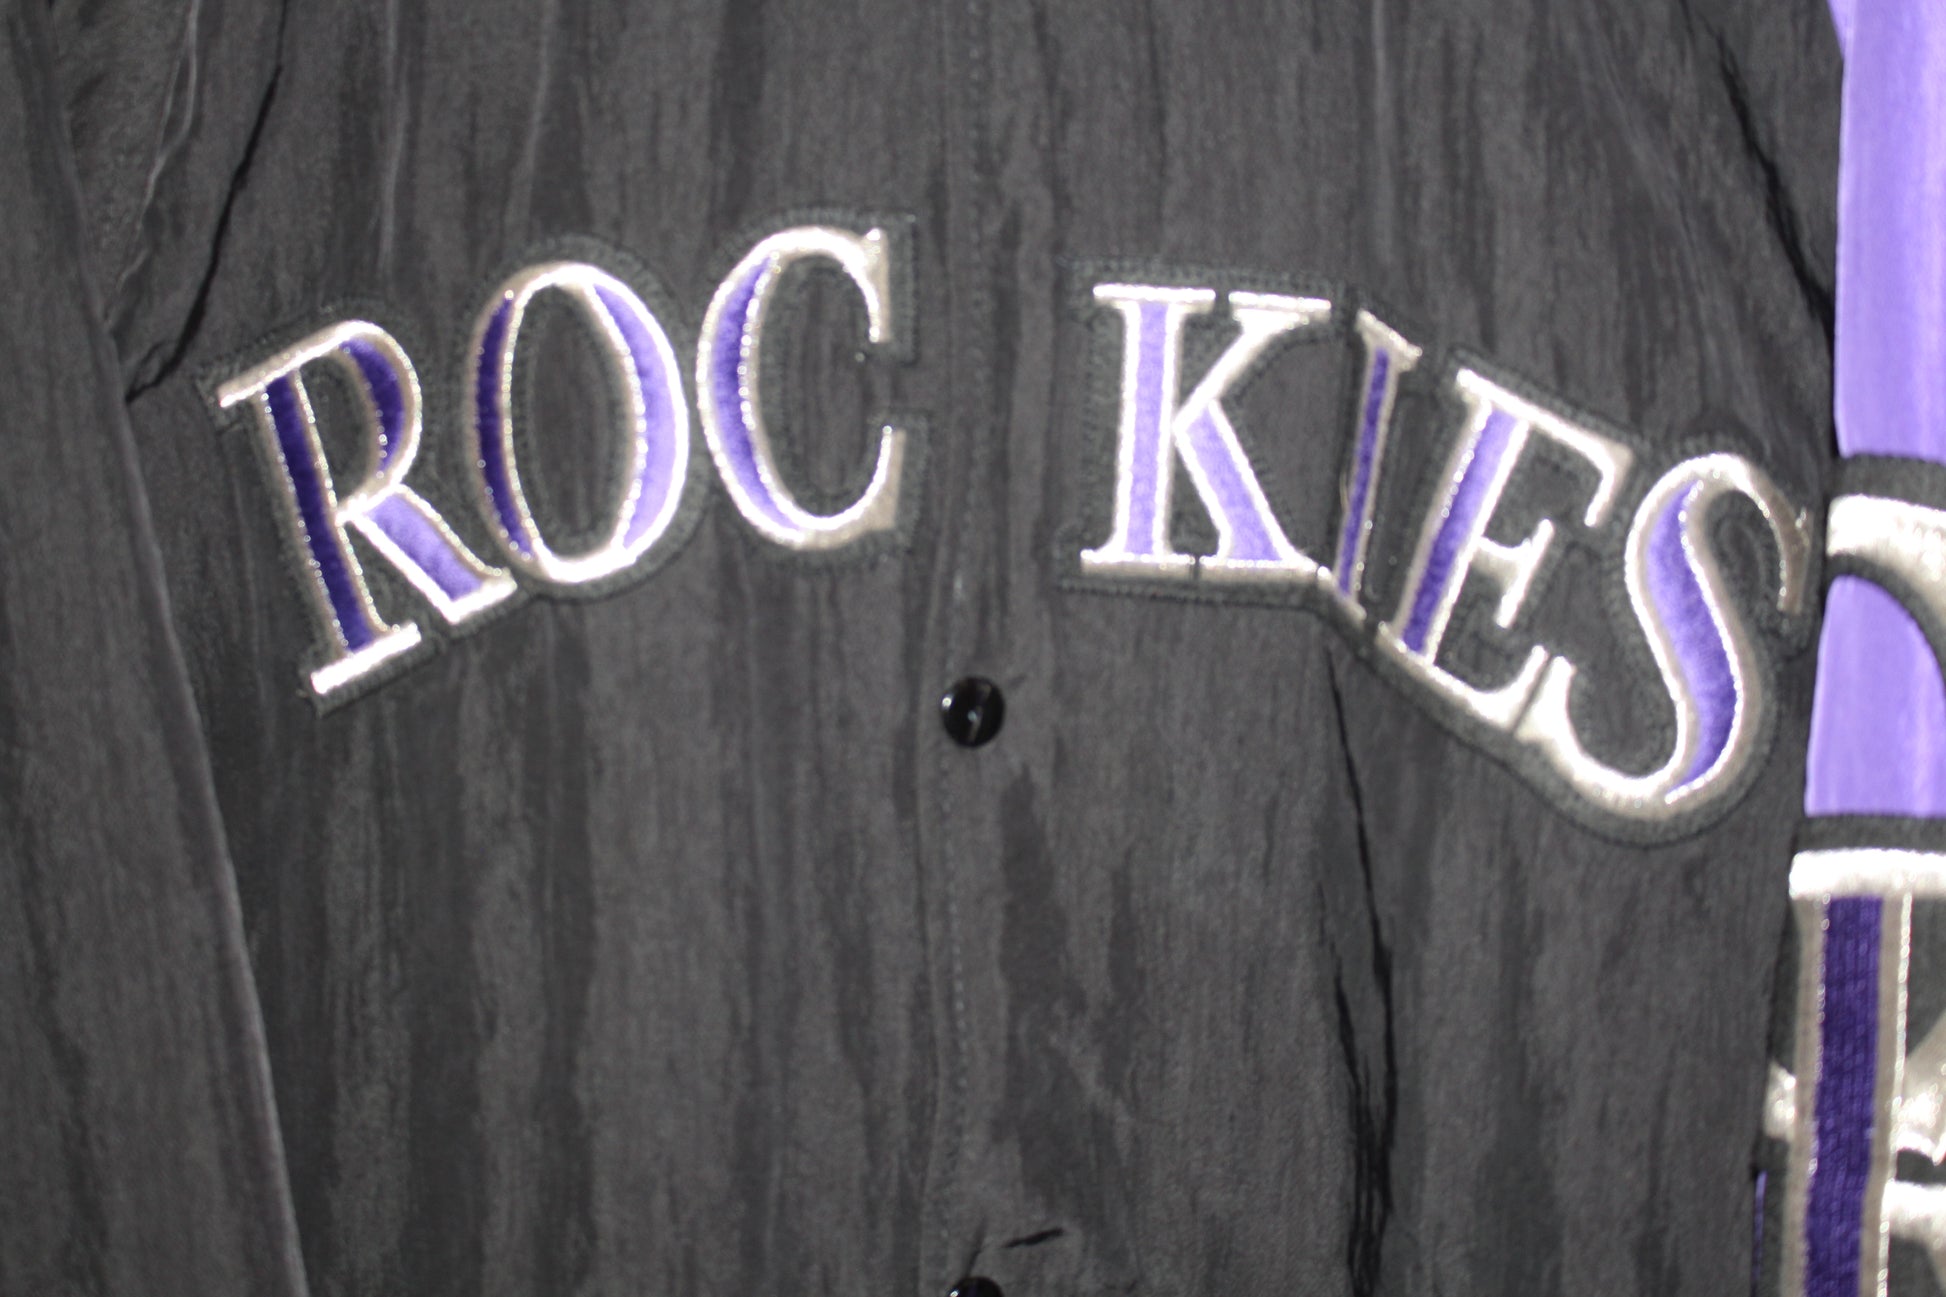 Maker of Jacket MLB Colorado Rockies Vintage Purple Satin